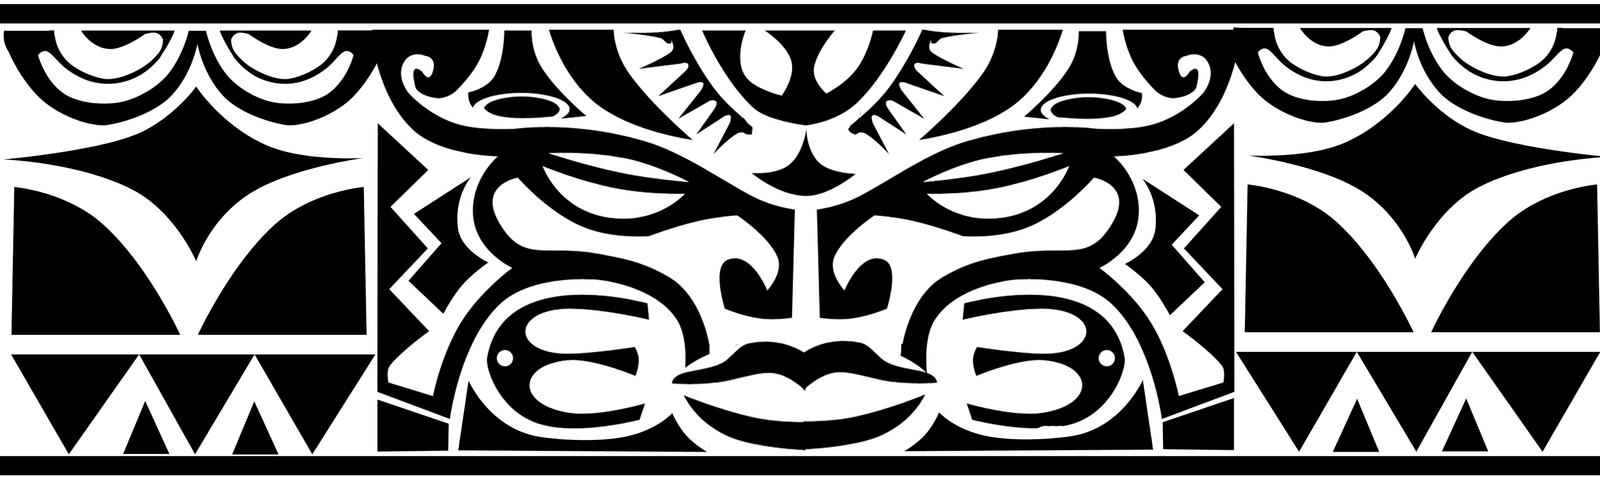 Maori Design 7 by twilight1983 on deviantART